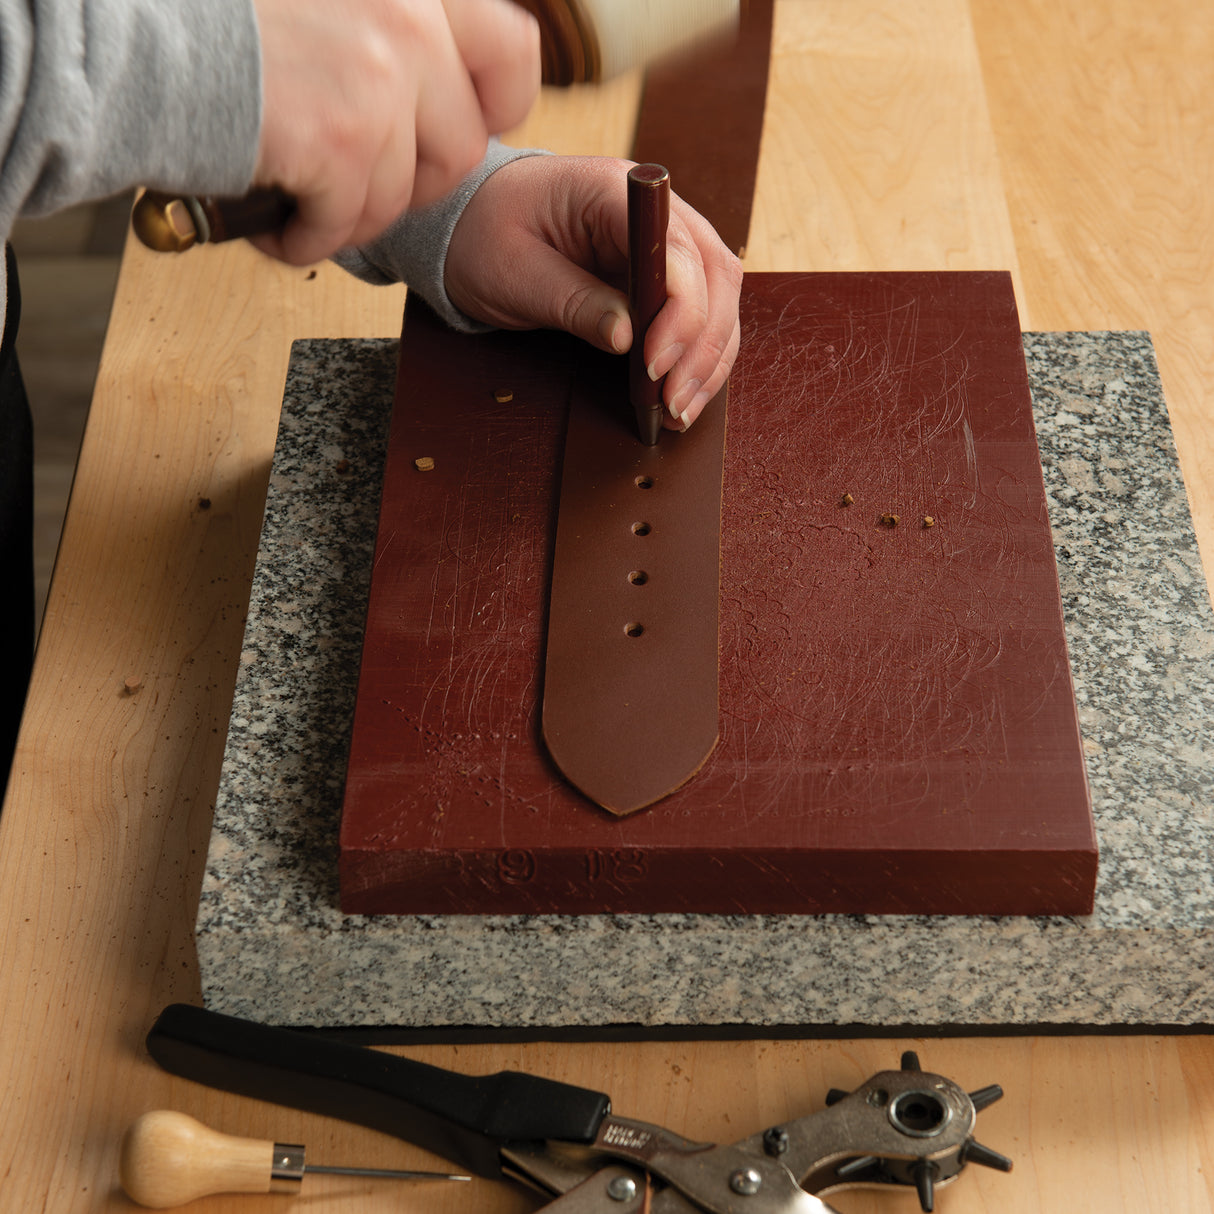 6 pcs Oval Shape Hole Punch Set, 6 Sizes 2-4mm Leather Belt Hollow Punching  Tools, Oblong Shape DIY Leather Craft Working Cutting Tool Kit